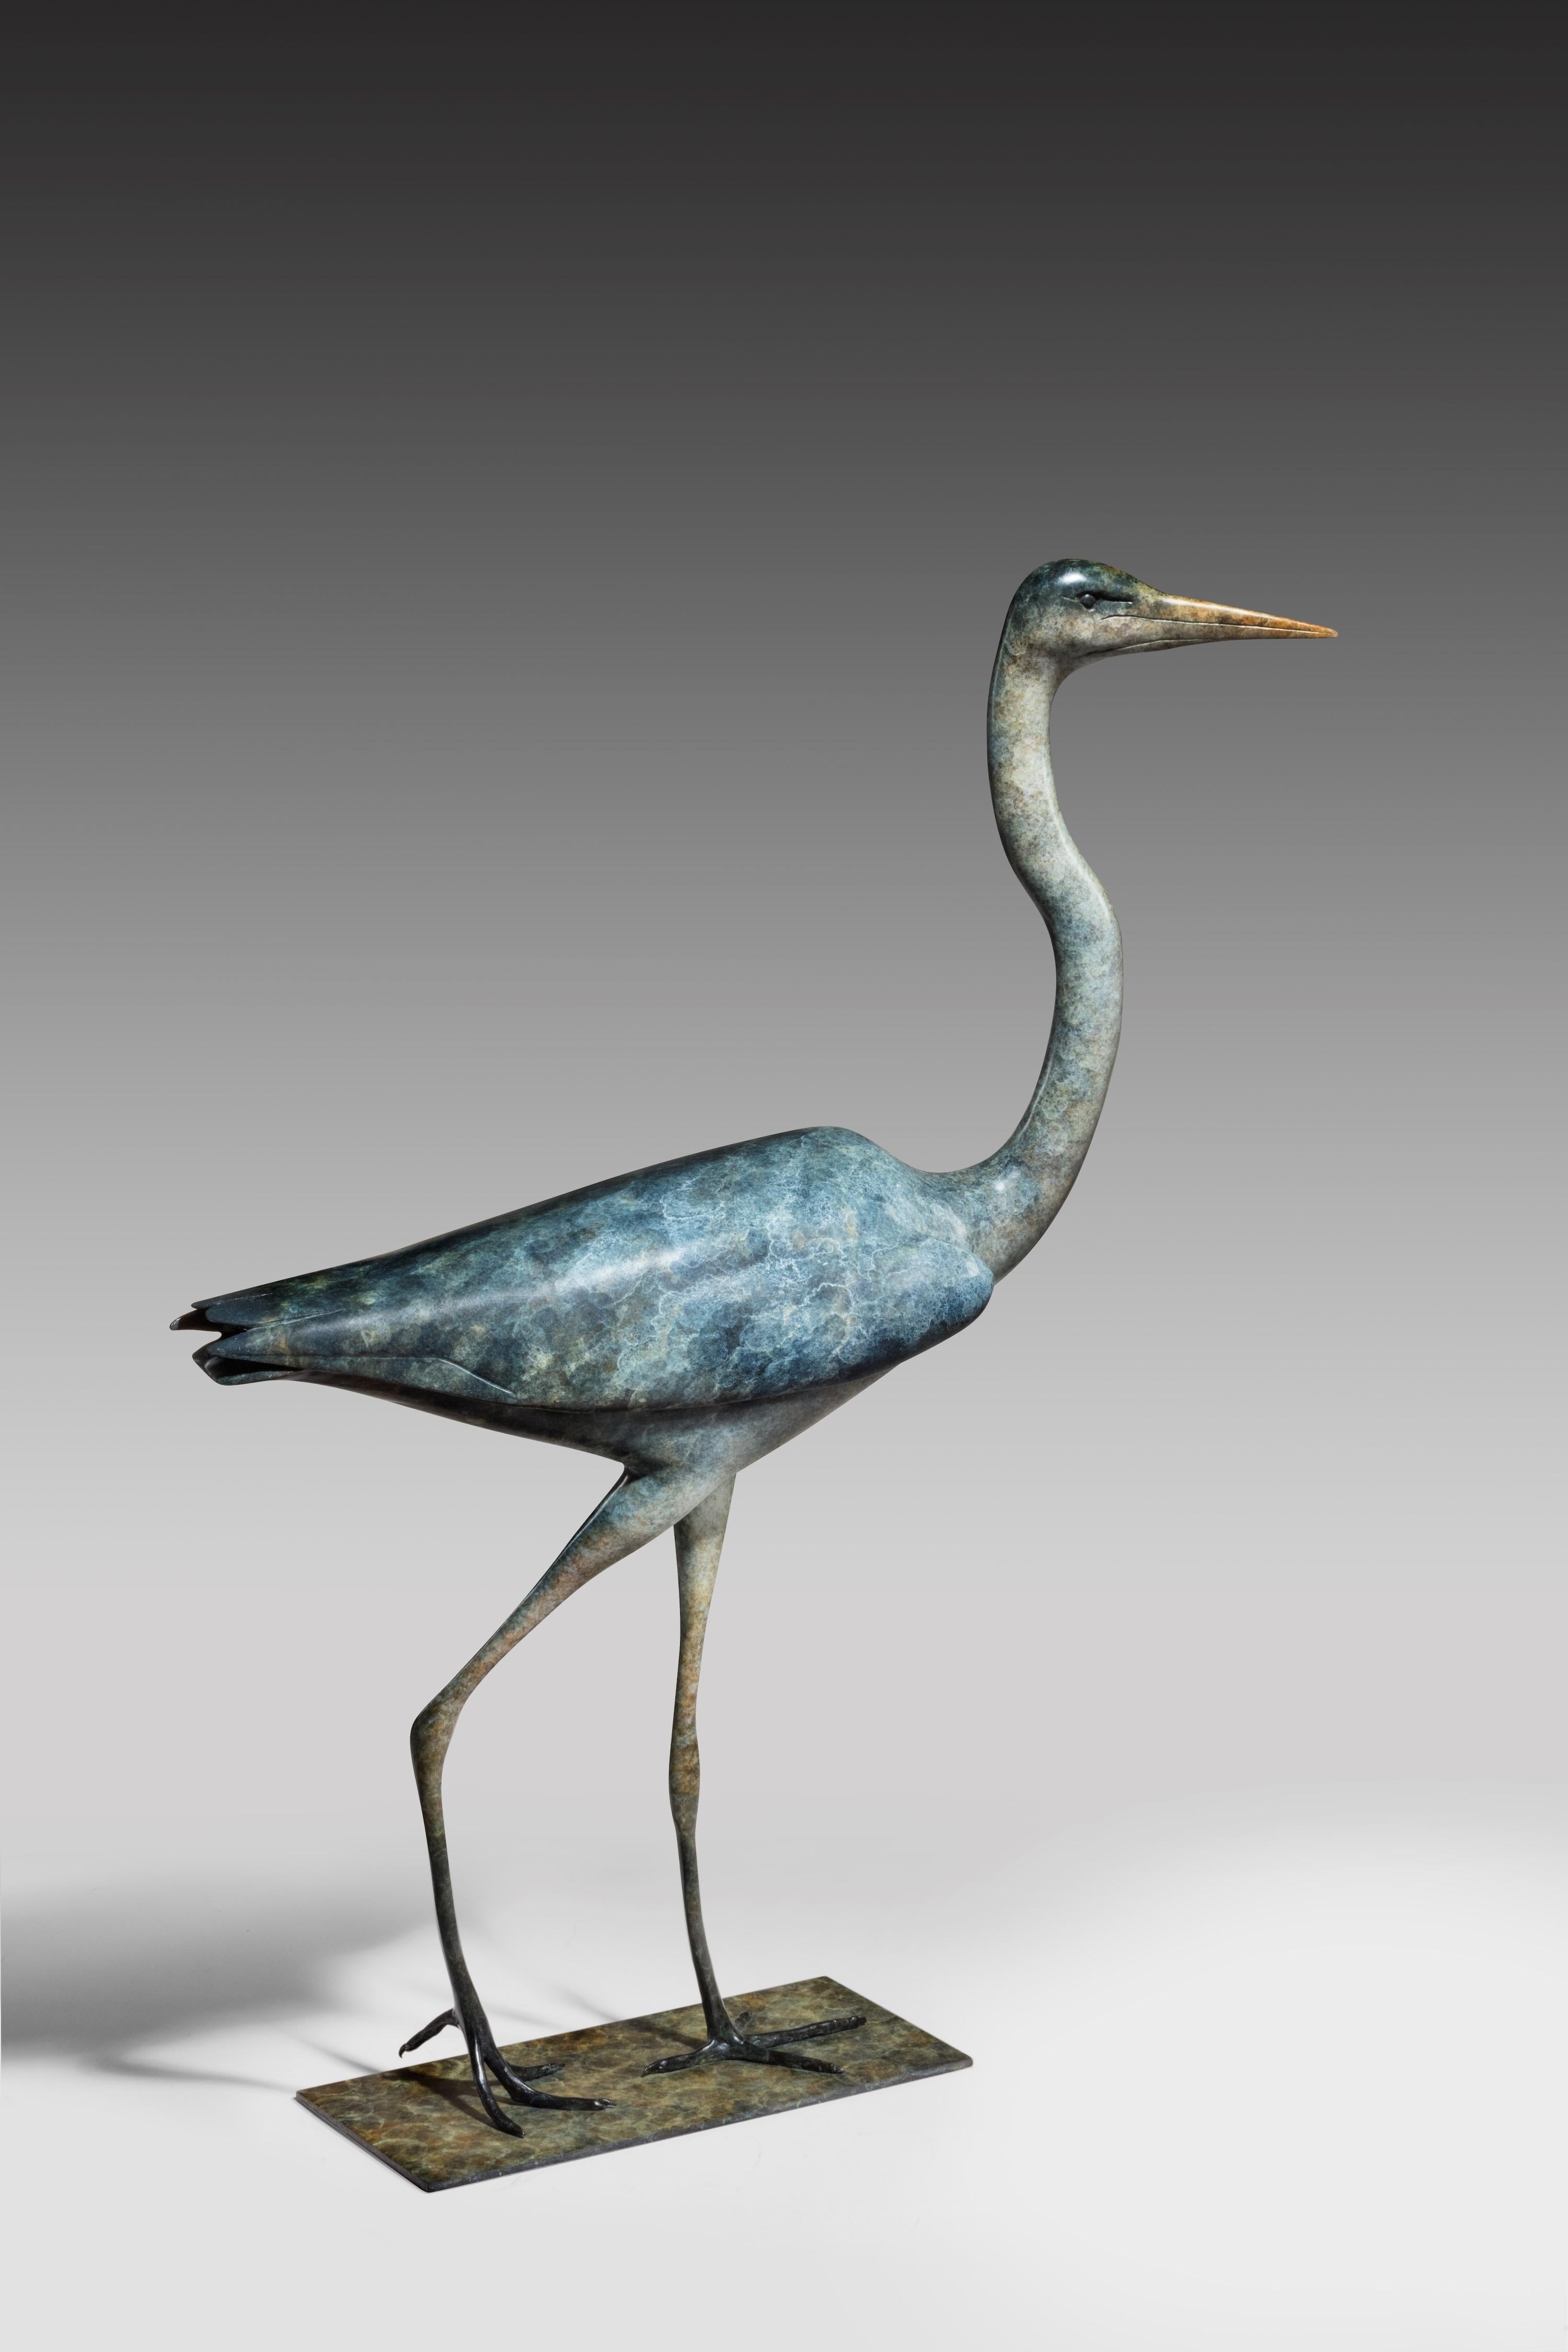 Richard Smith b.1955 Figurative Sculpture - 'Heron' Contemporary Bronze Bird. Wildlife & Nature Sculpture, Blue & White